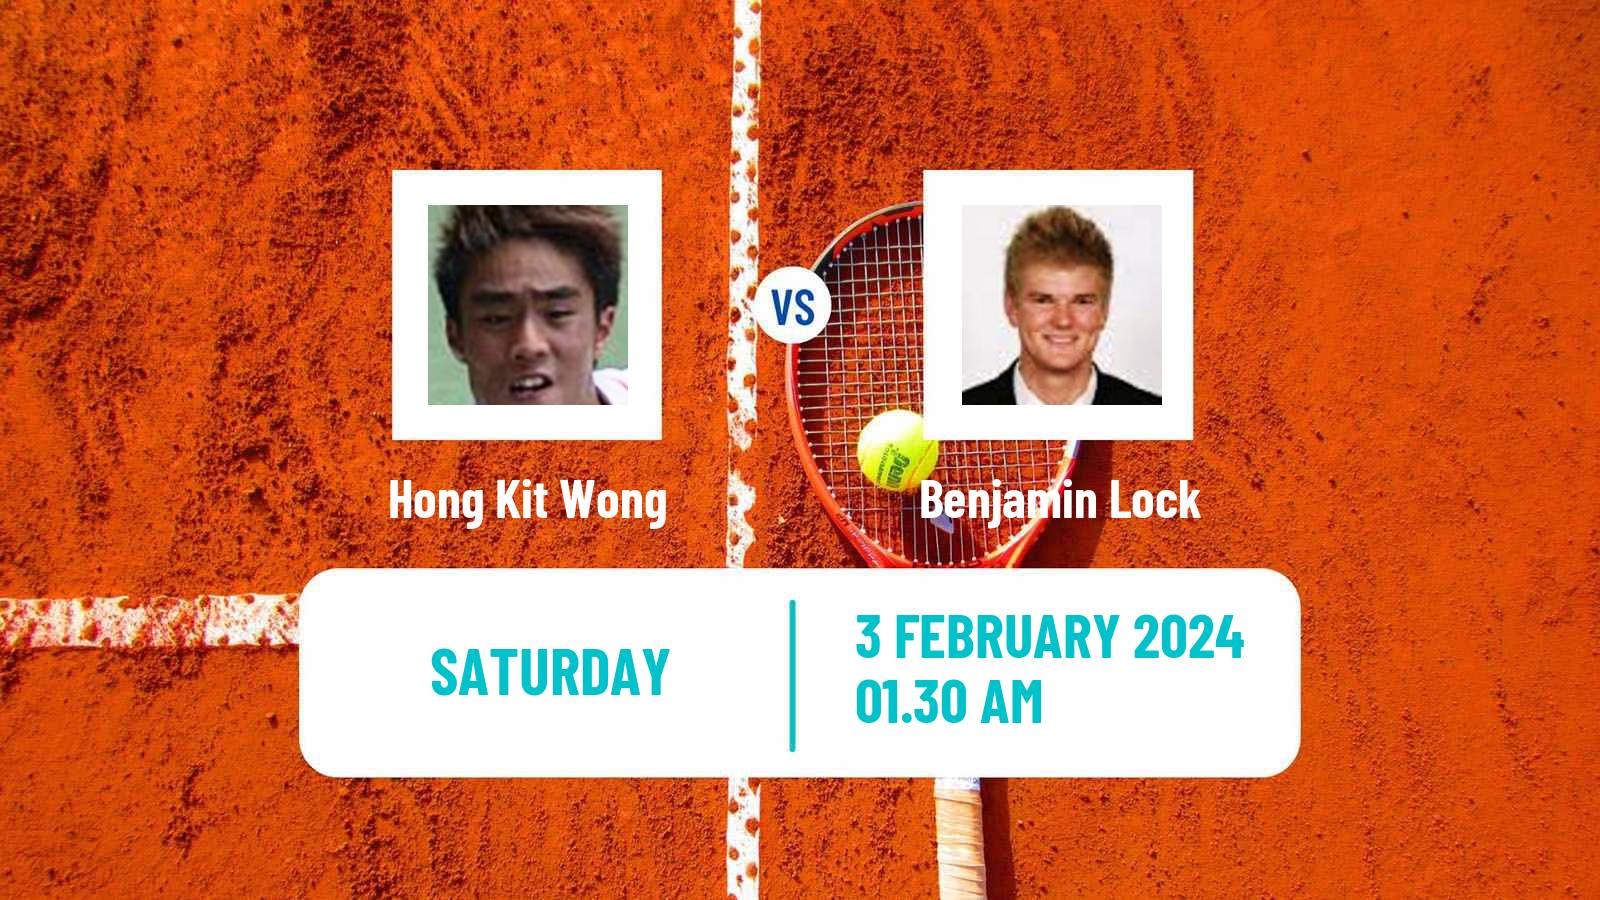 Tennis Davis Cup World Group II Hong Kit Wong - Benjamin Lock